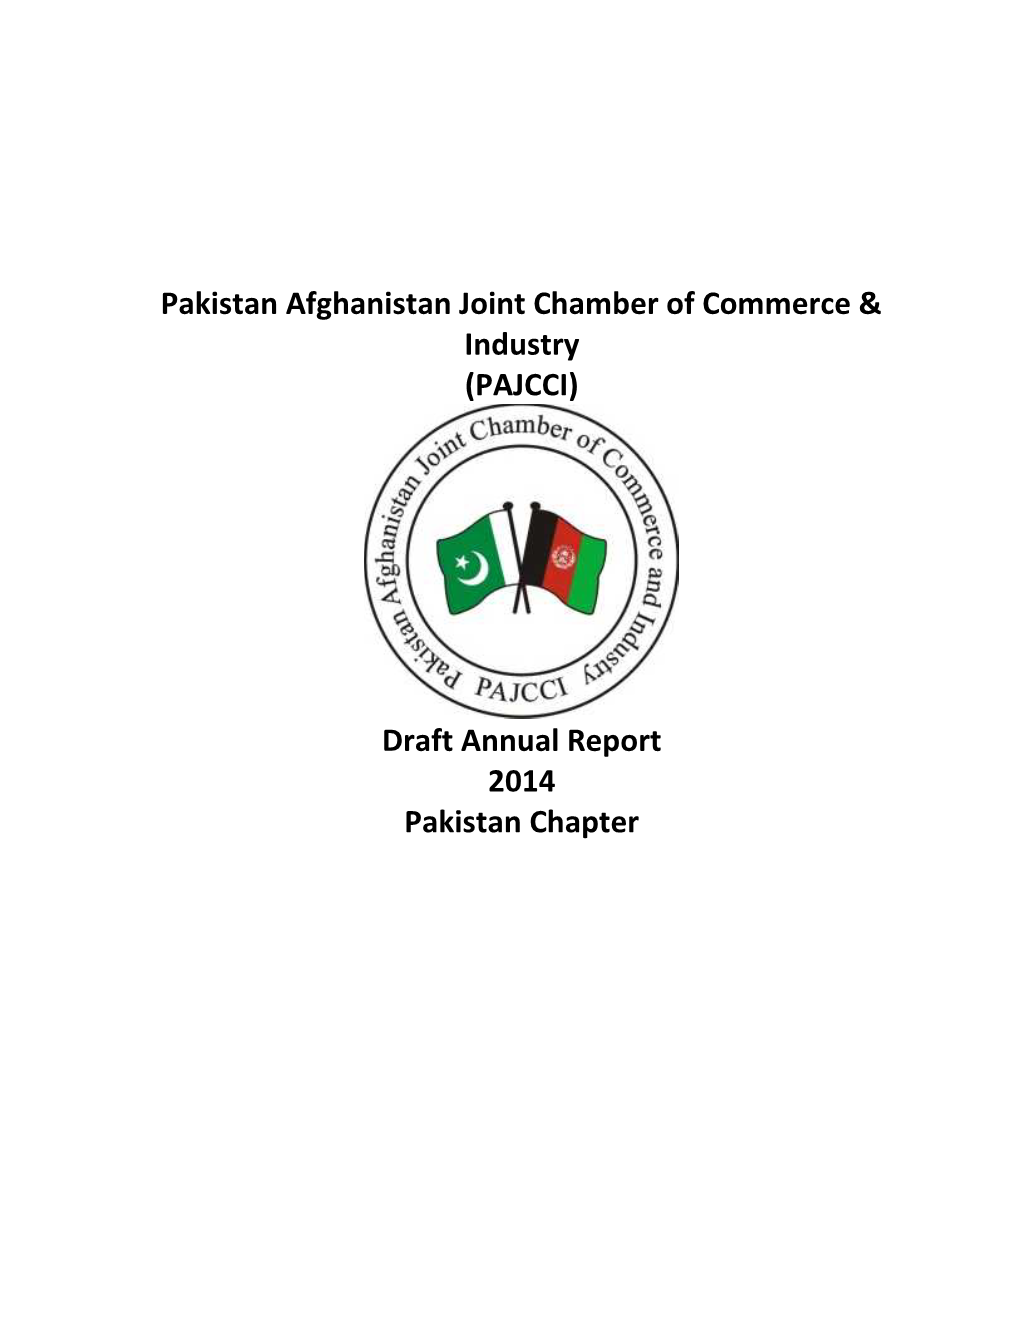 (PAJCCI) Draft Annual Report 2014 Pakistan Chapter